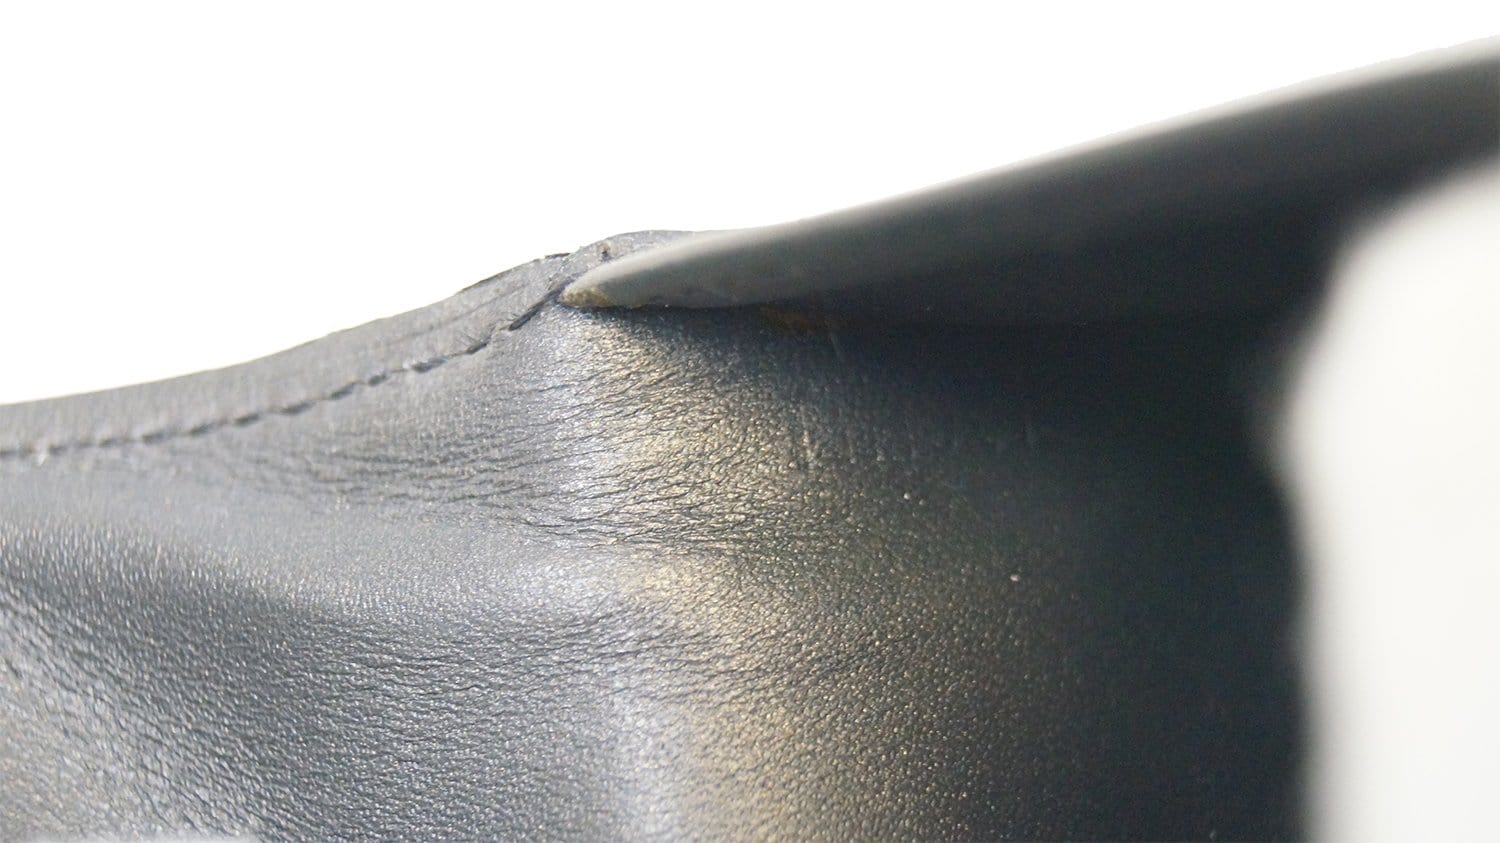 Louis Vuitton Black Epi Leather Porte Tresor International Wallet